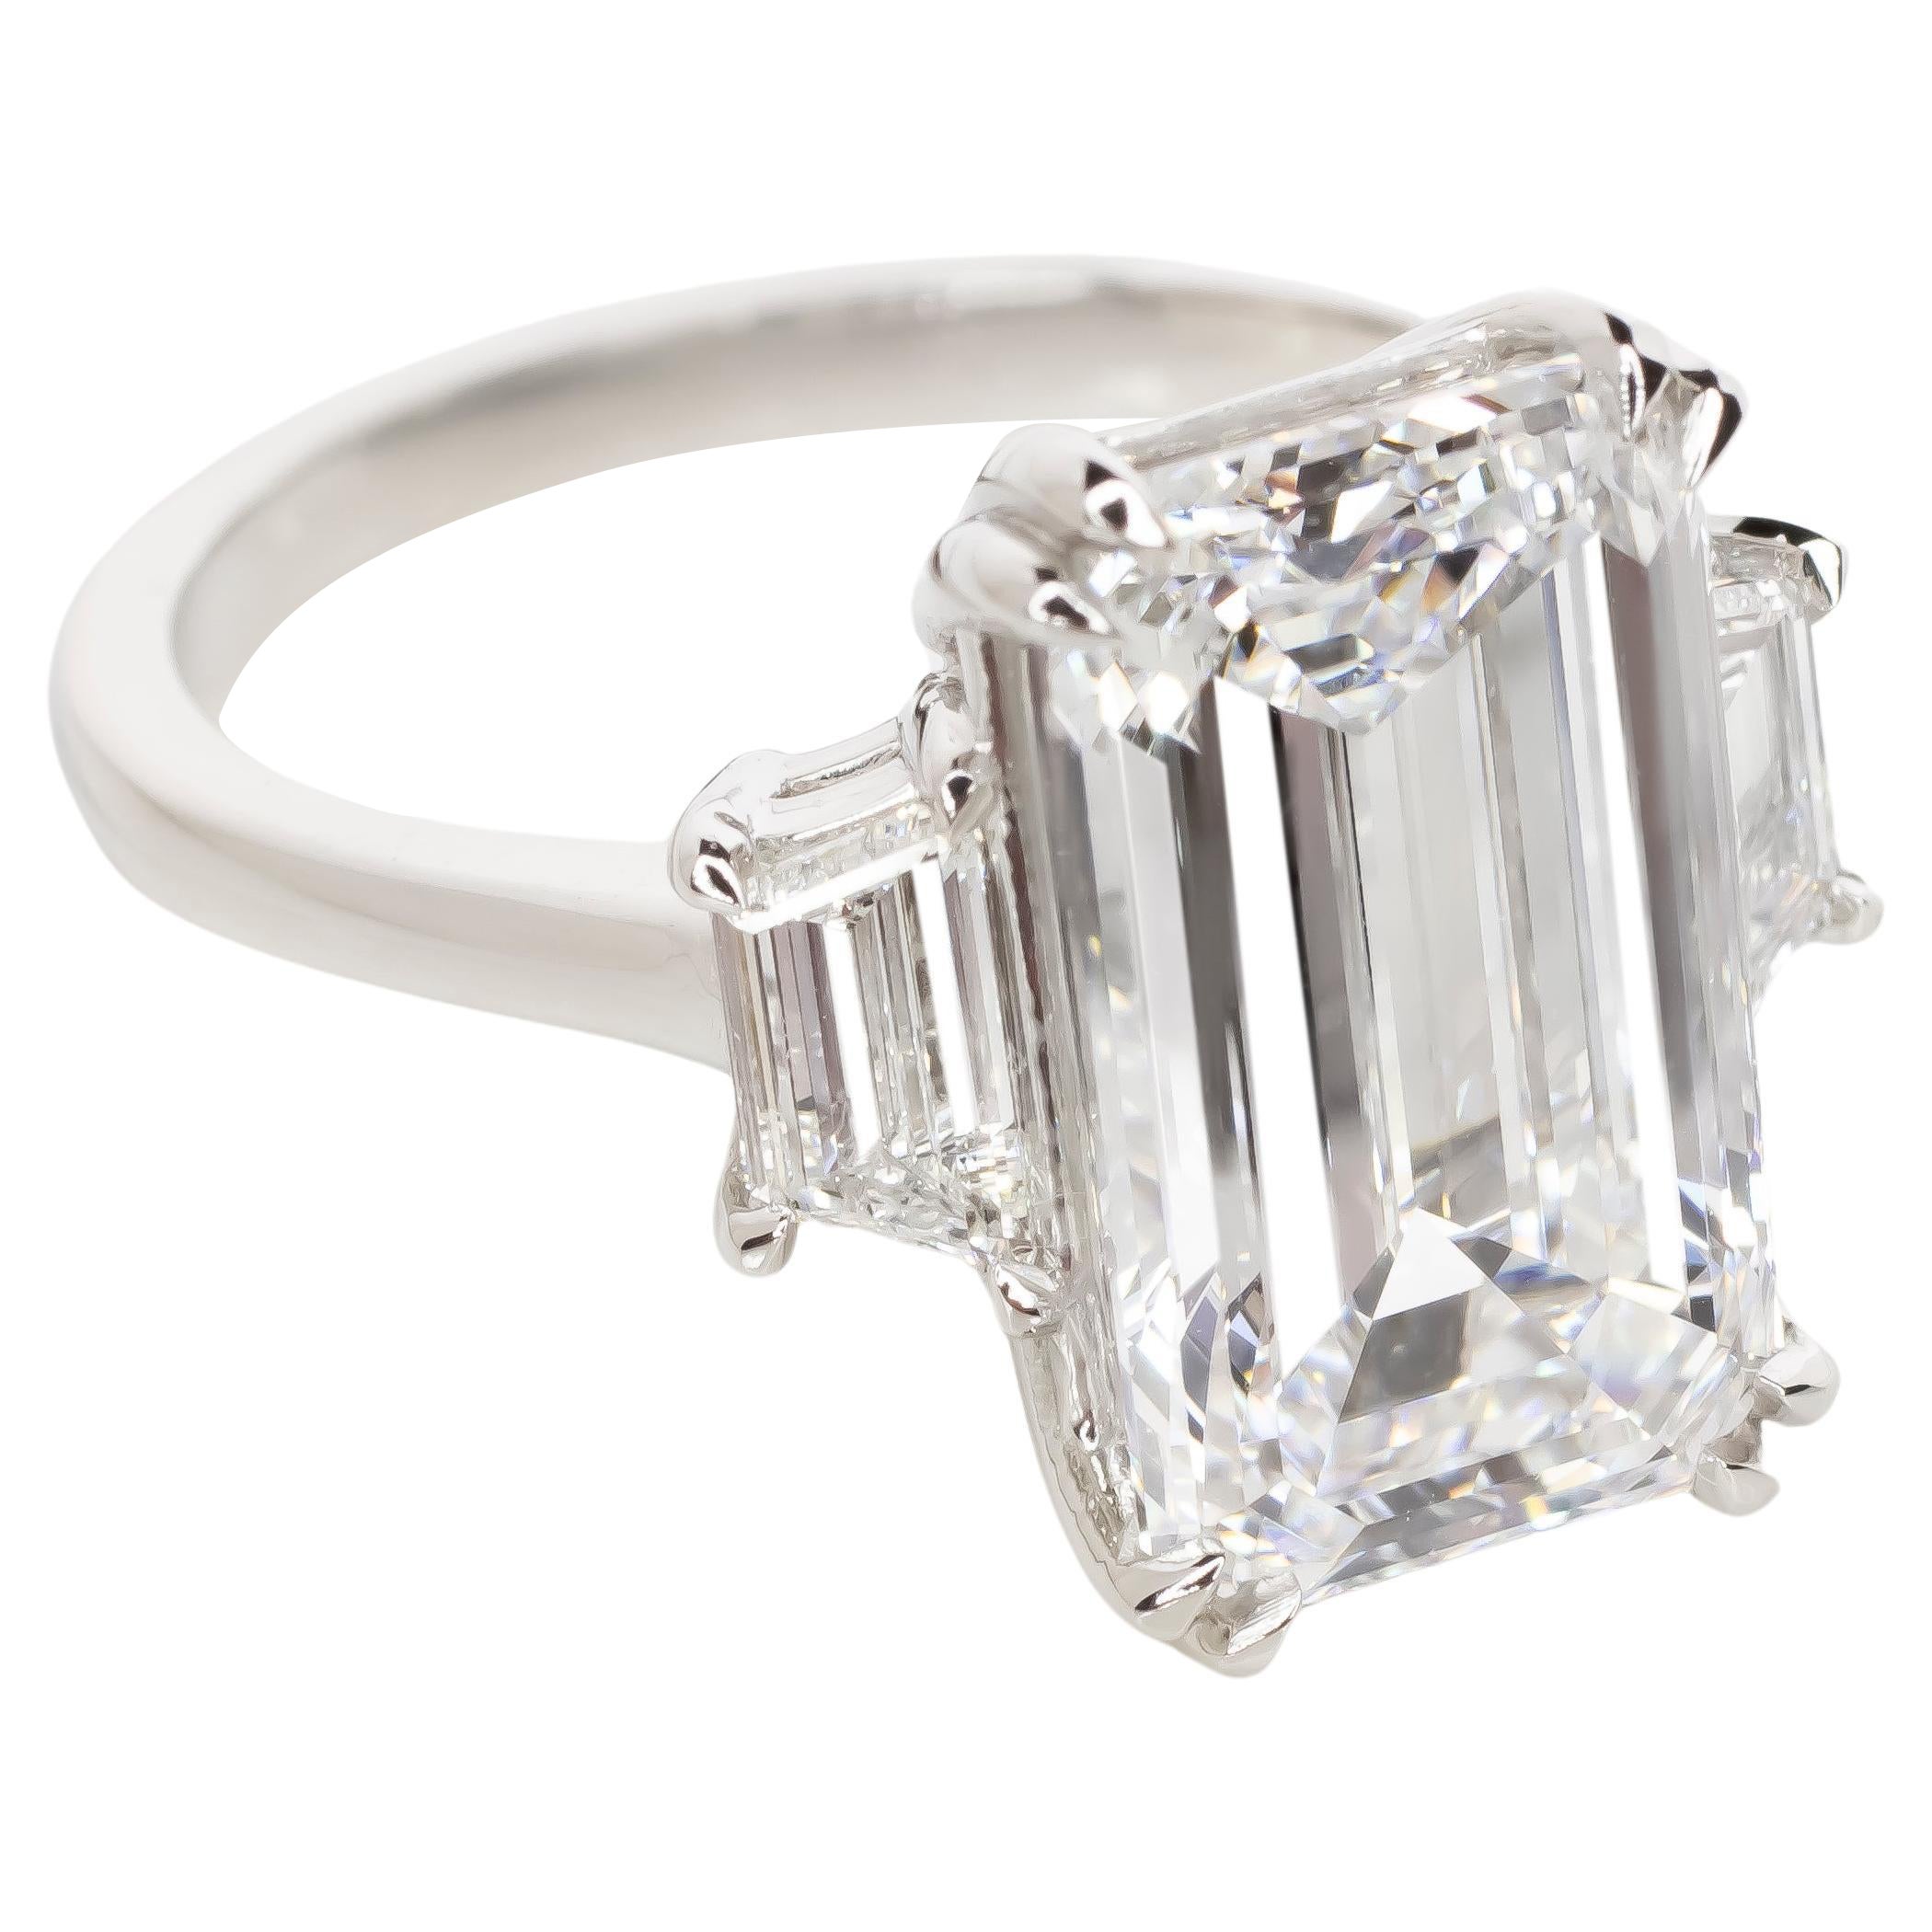 GIA Certified 5 Carat D Color Emerald Cut Diamond Ring TYPE IIA For Sale